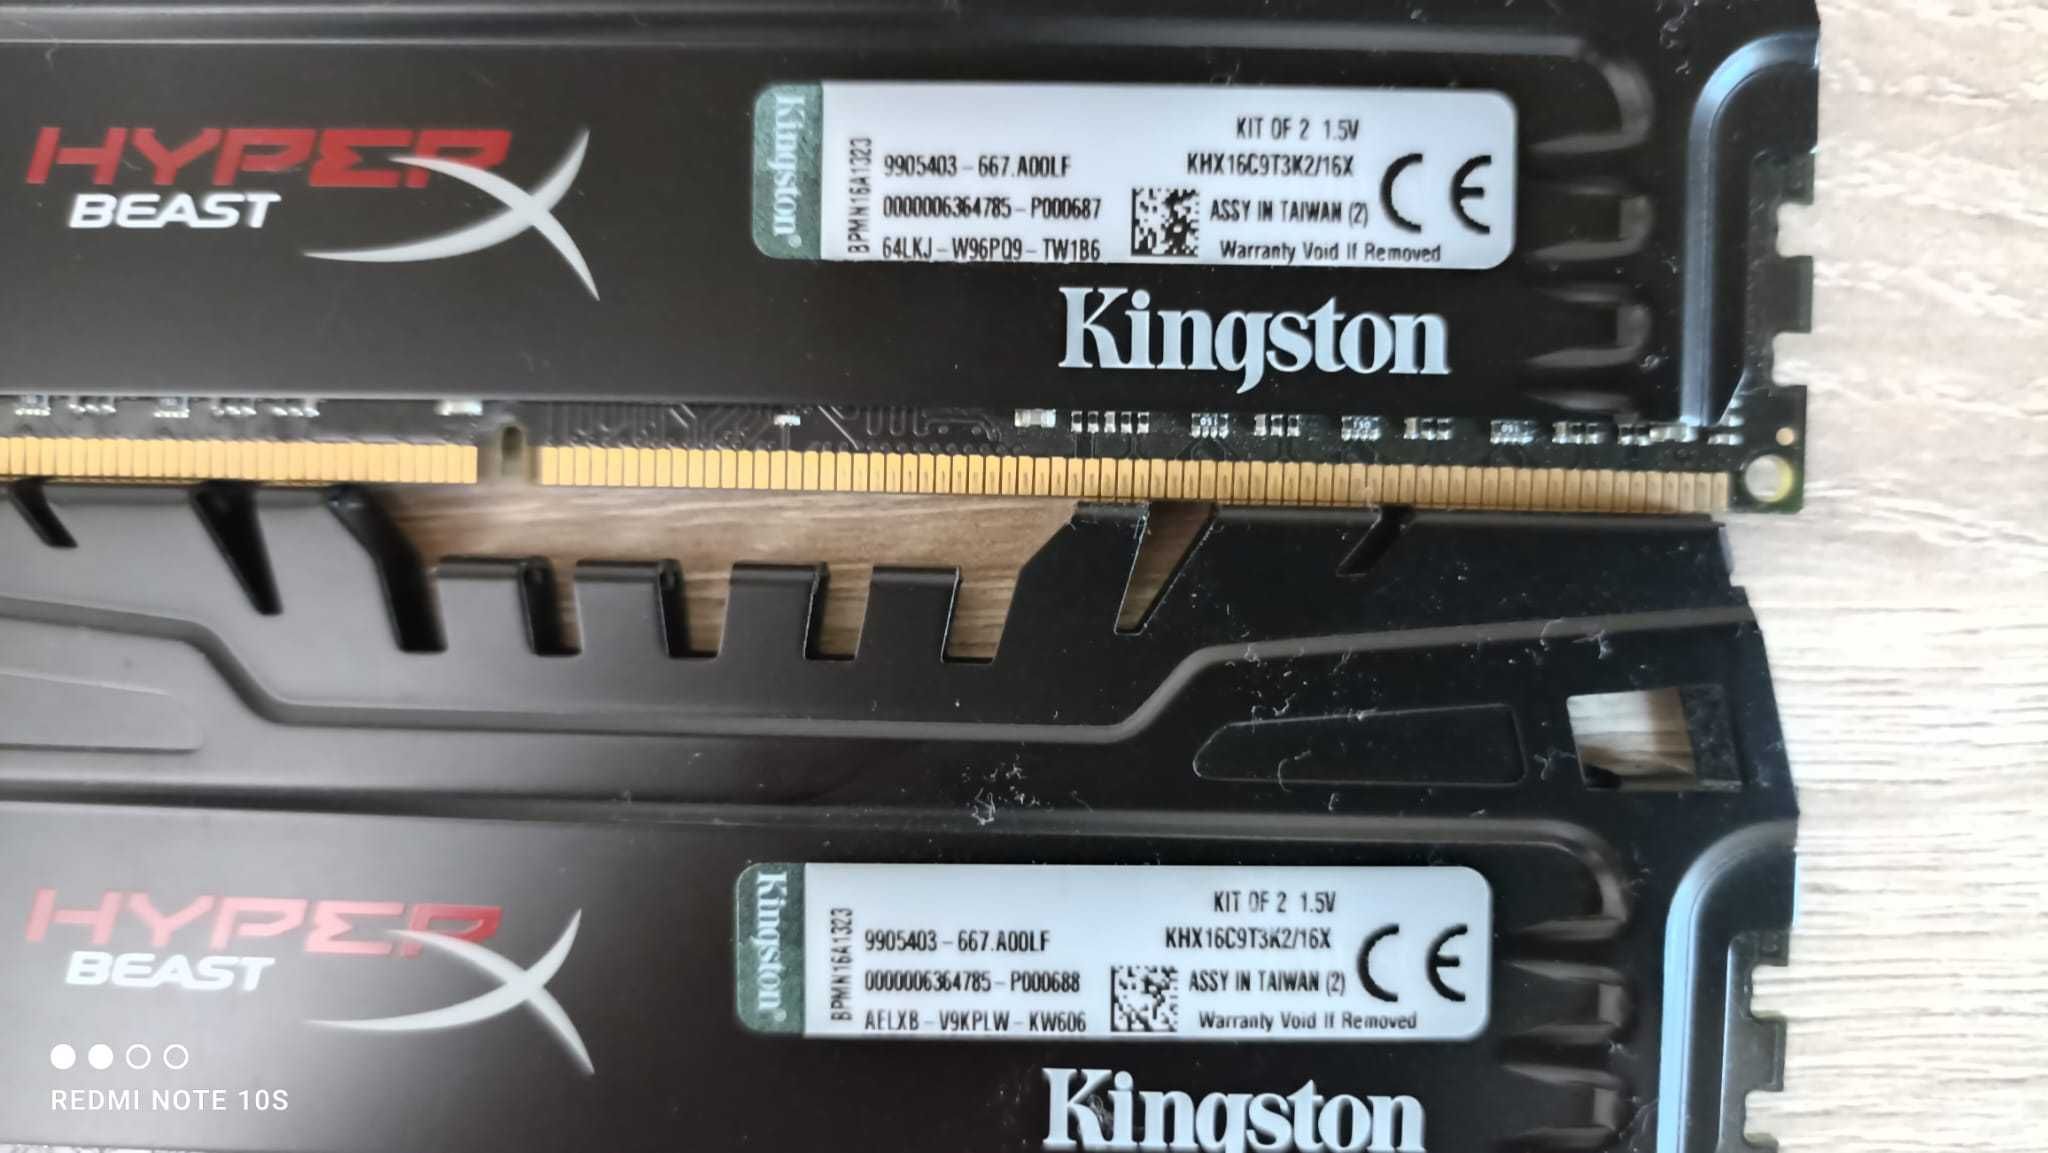 Kit Intel i7 3770k + Asrock Z77 Extreme 4 + Kingston 16GB DDR3